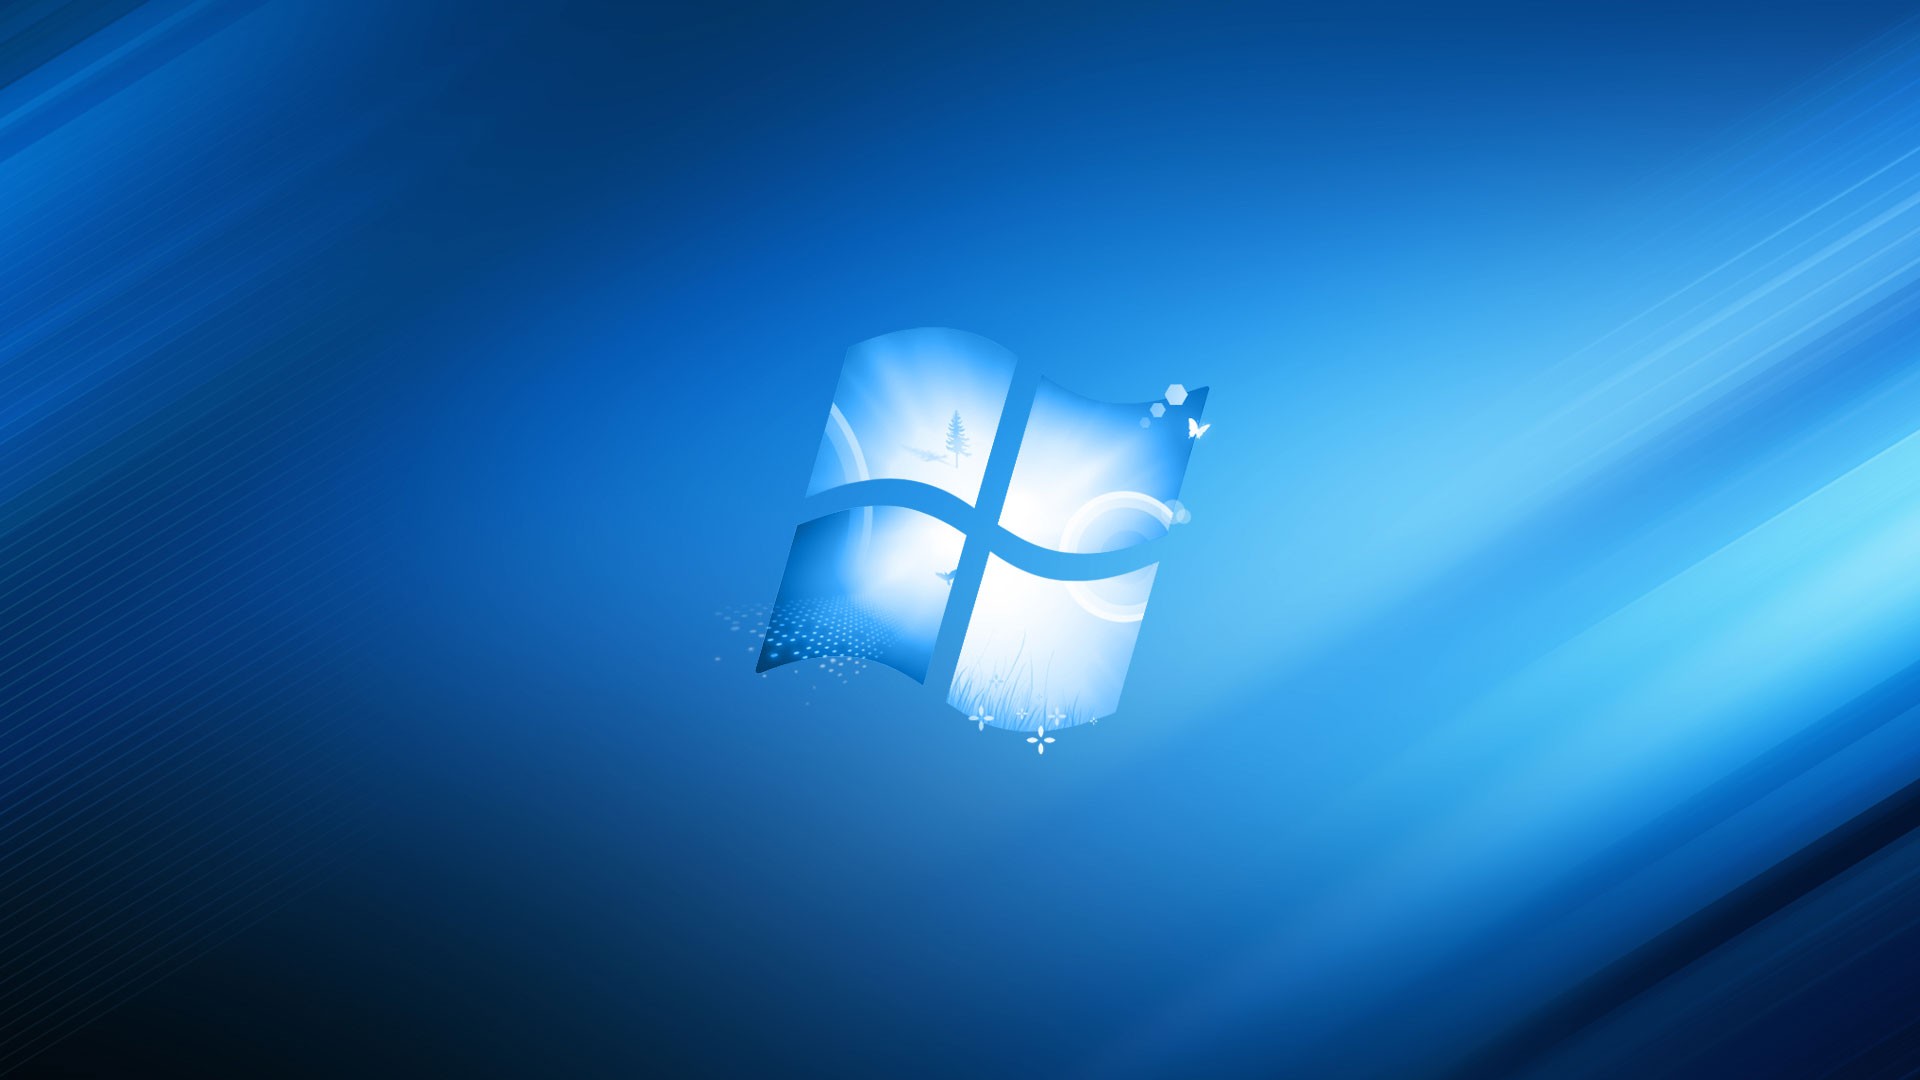 Artwork Windows 7 Window Wallpapers Hd Desktop And Mobile Backgrounds